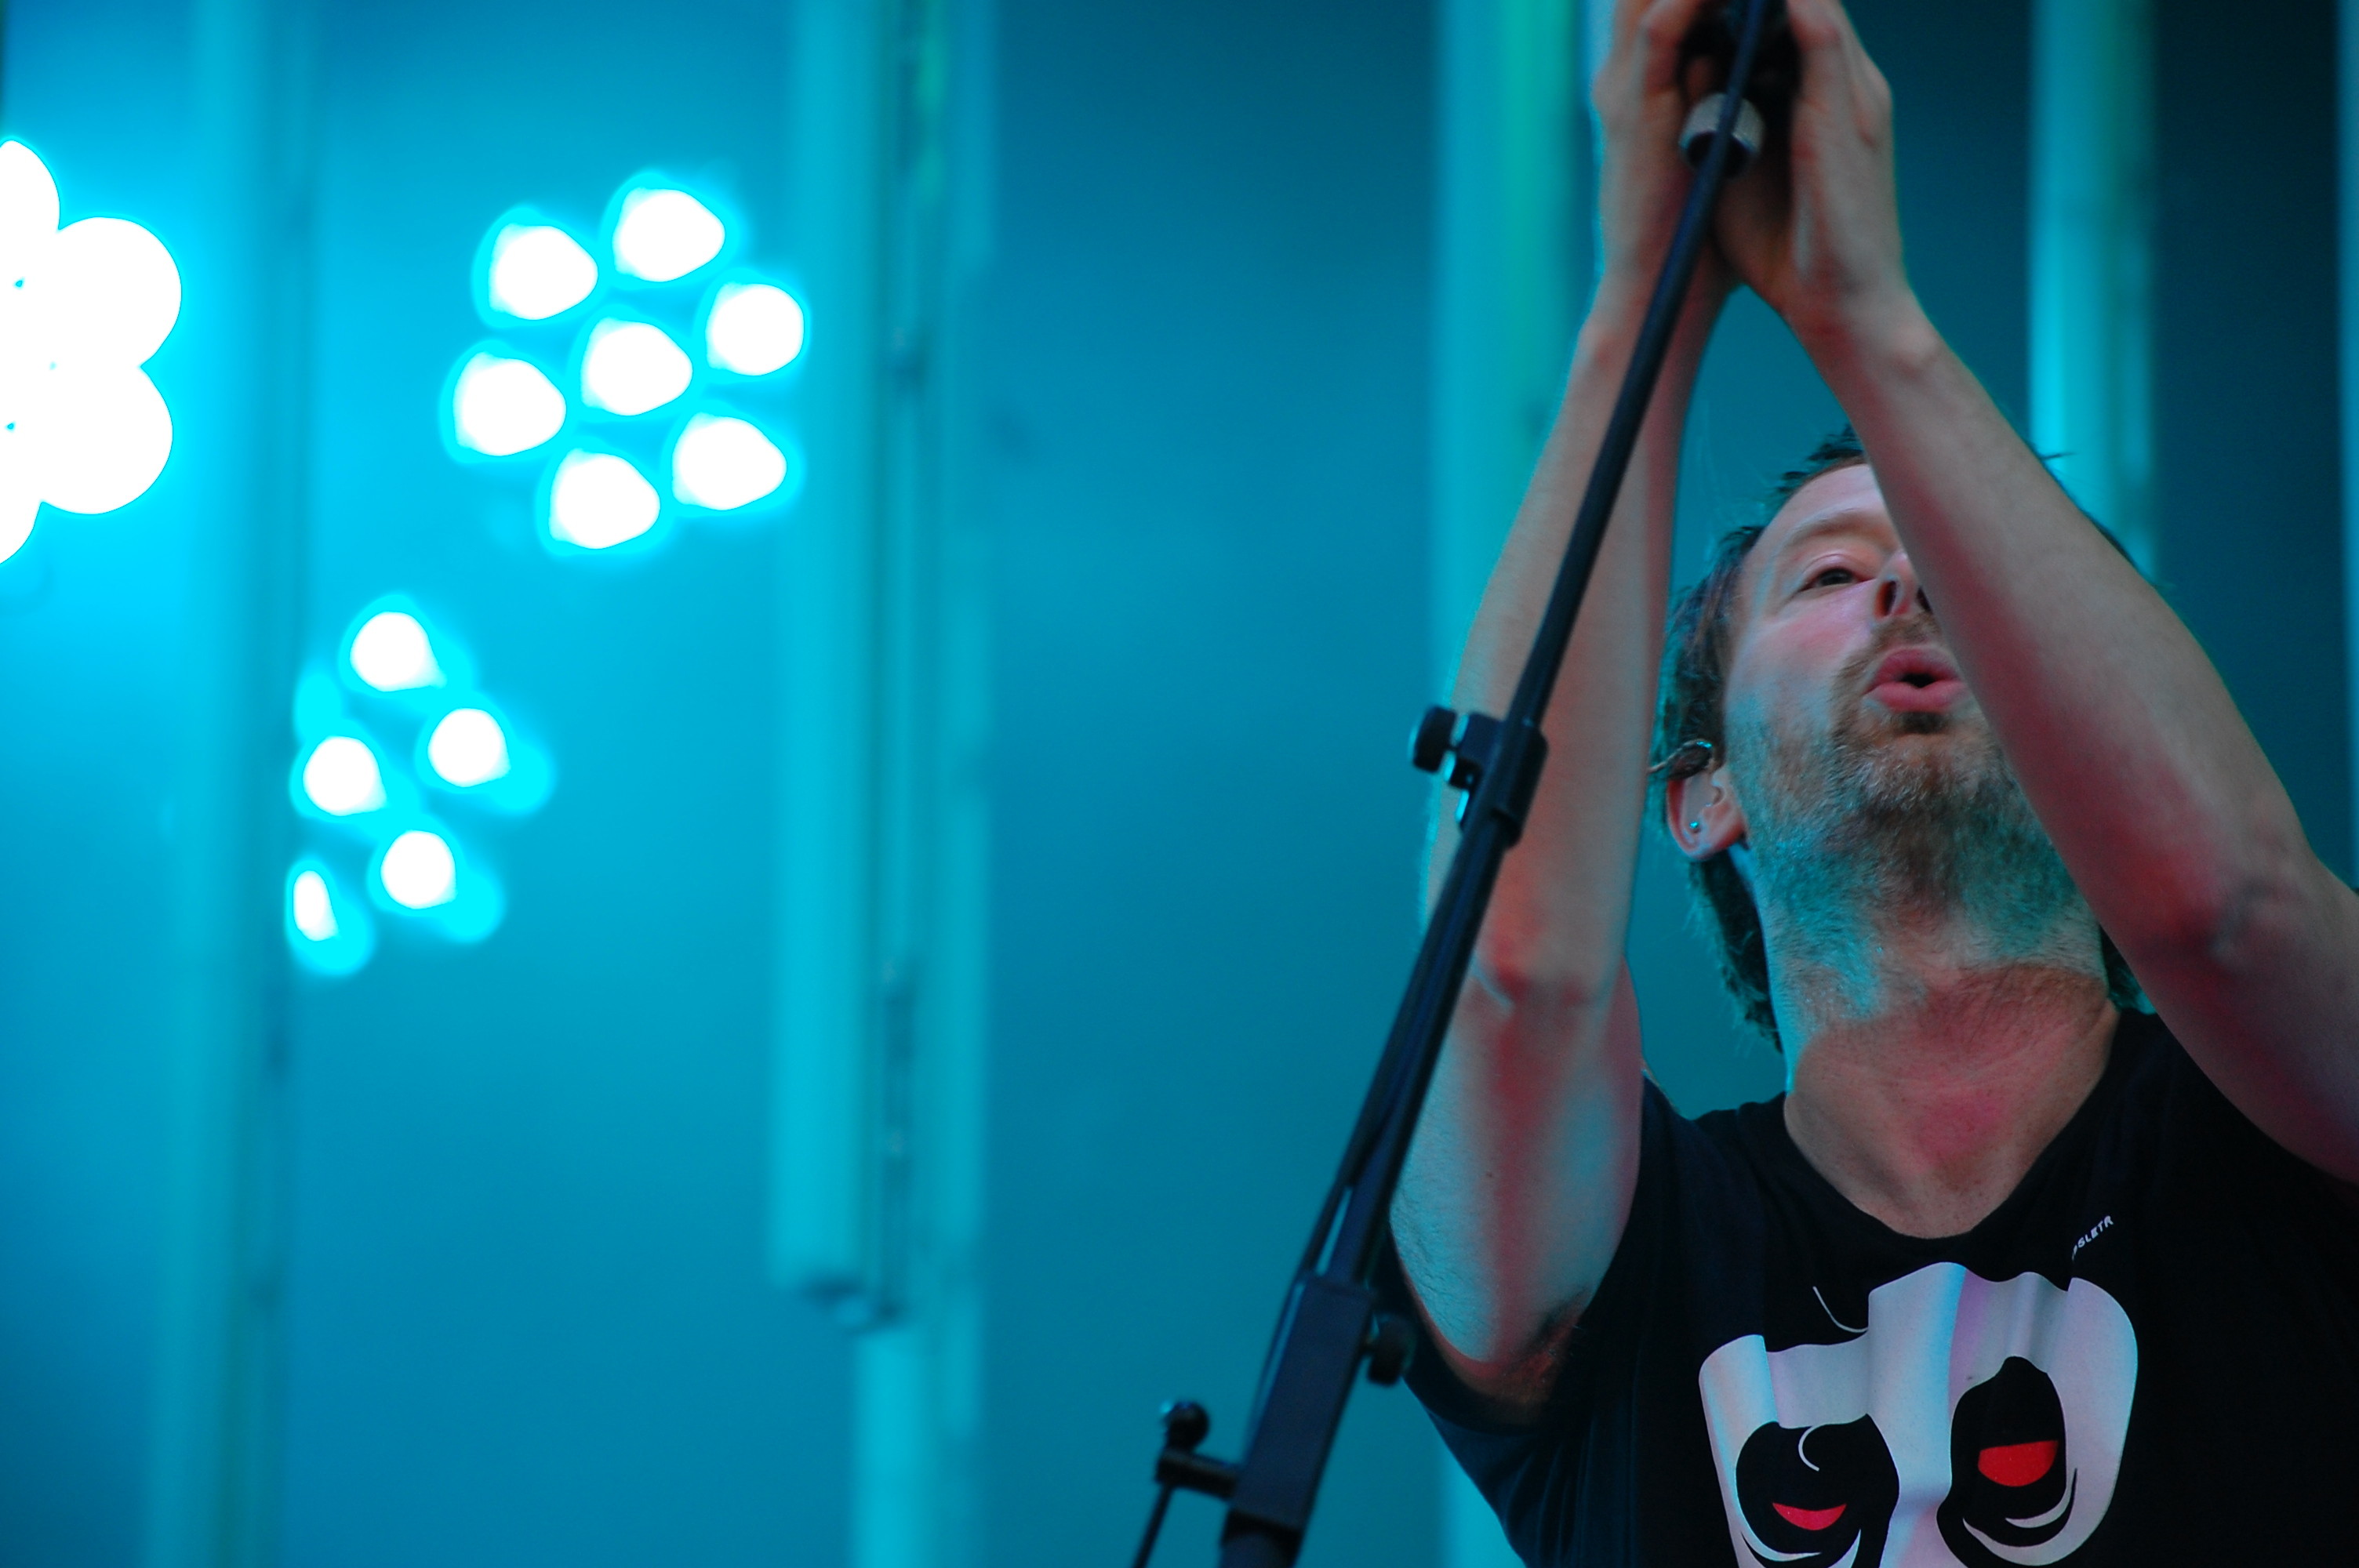 Вокалист и гитарист группы Radiohead Том Йорк.&nbsp;Фото: &copy;Flickr/whittlz